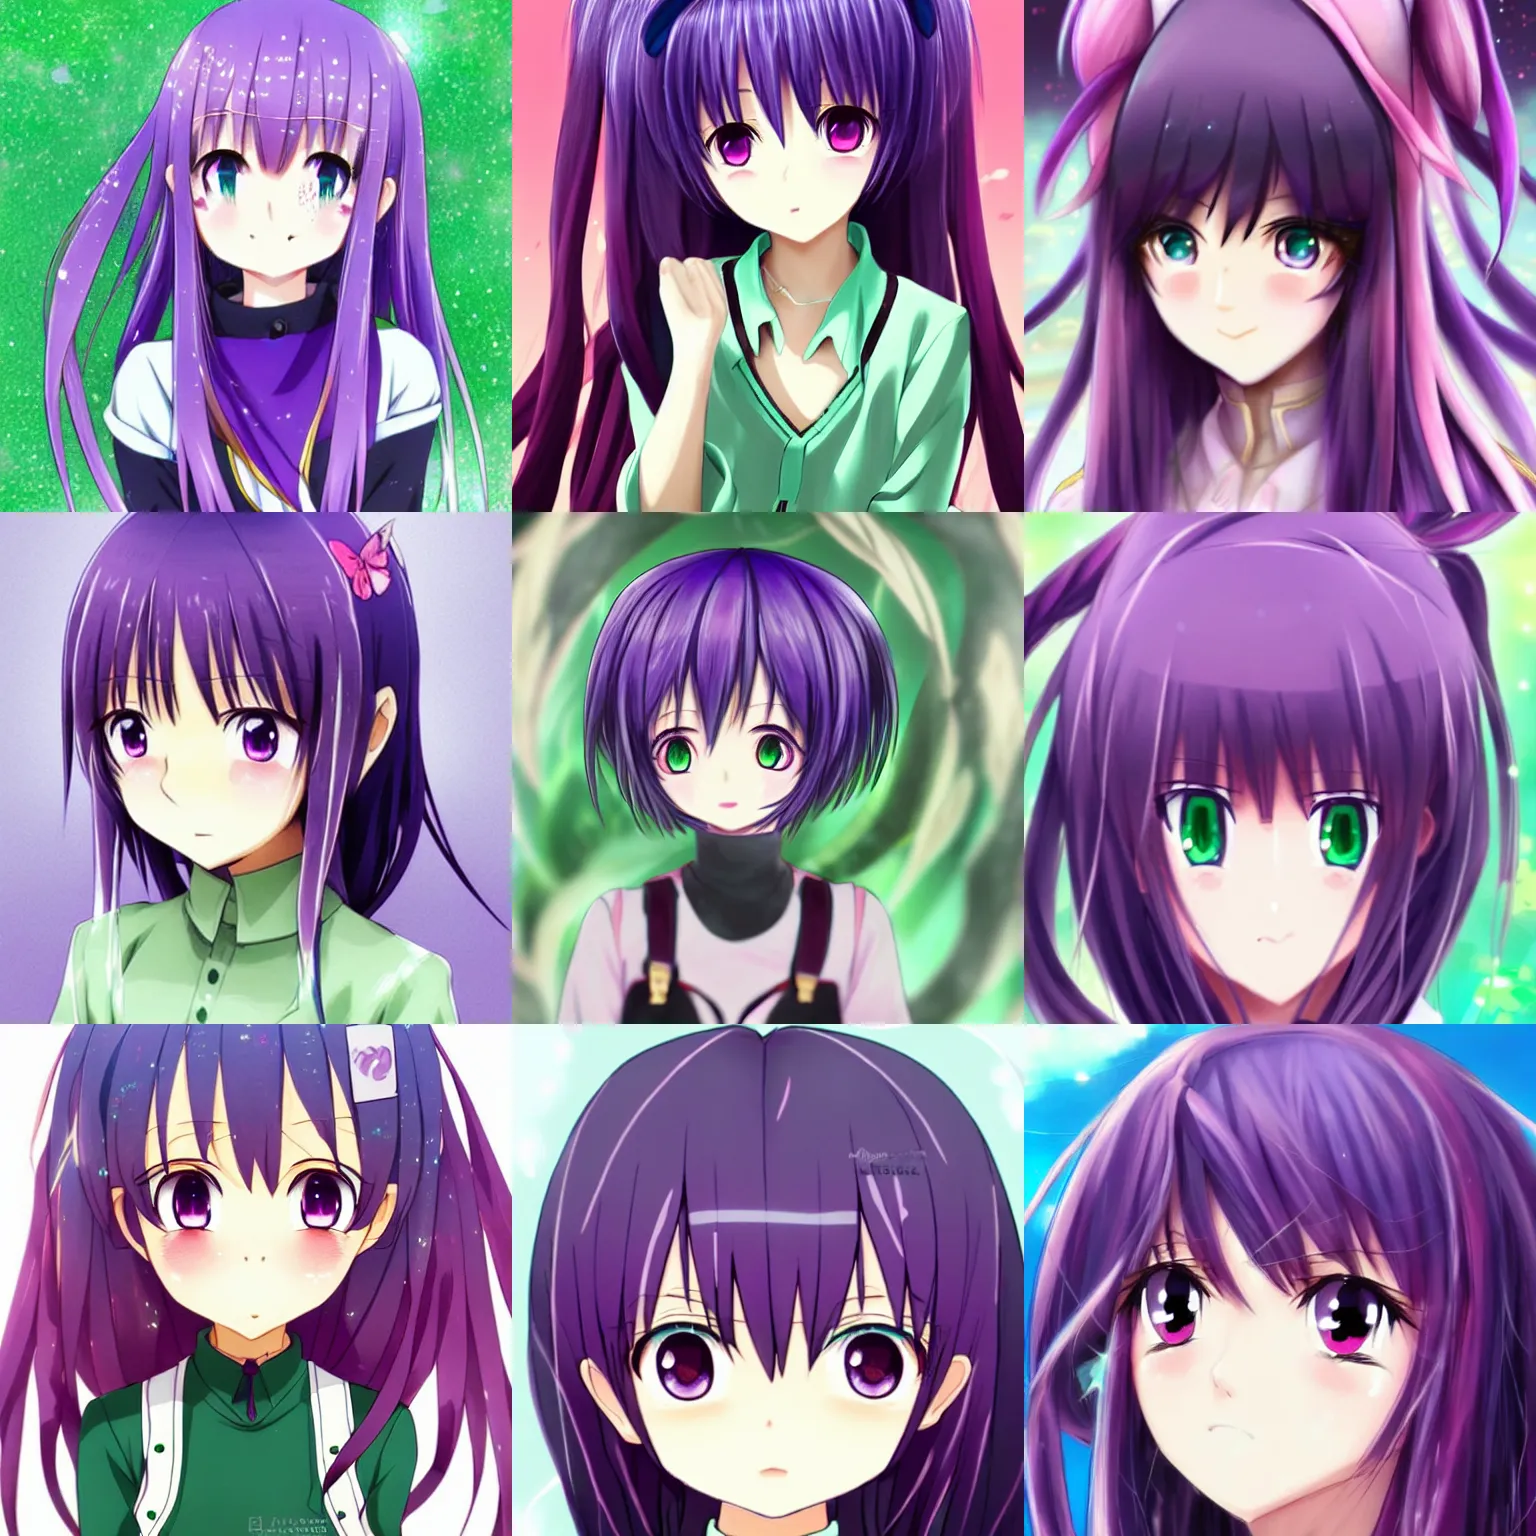 Prompt: cute pretty anime lariennechan portrait with green eyes, big round eyes, symmetrical face, purple hair